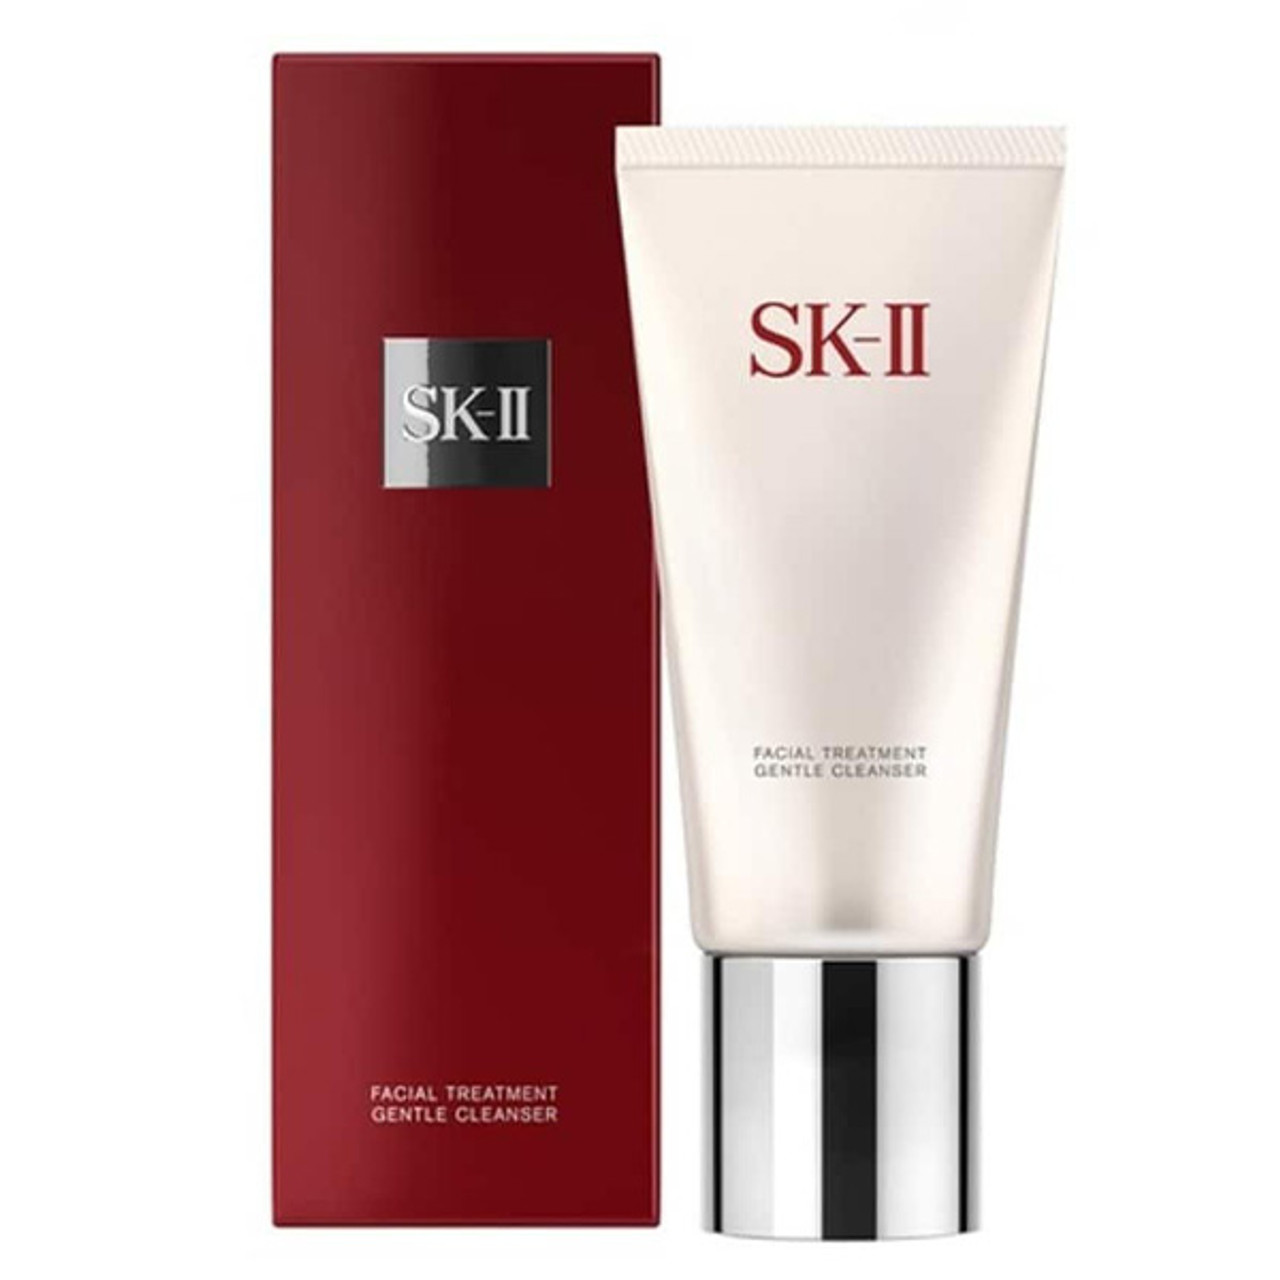 Sk II Facial Treatment Gentle Cleanser - 4 oz (120g) (FN216059)